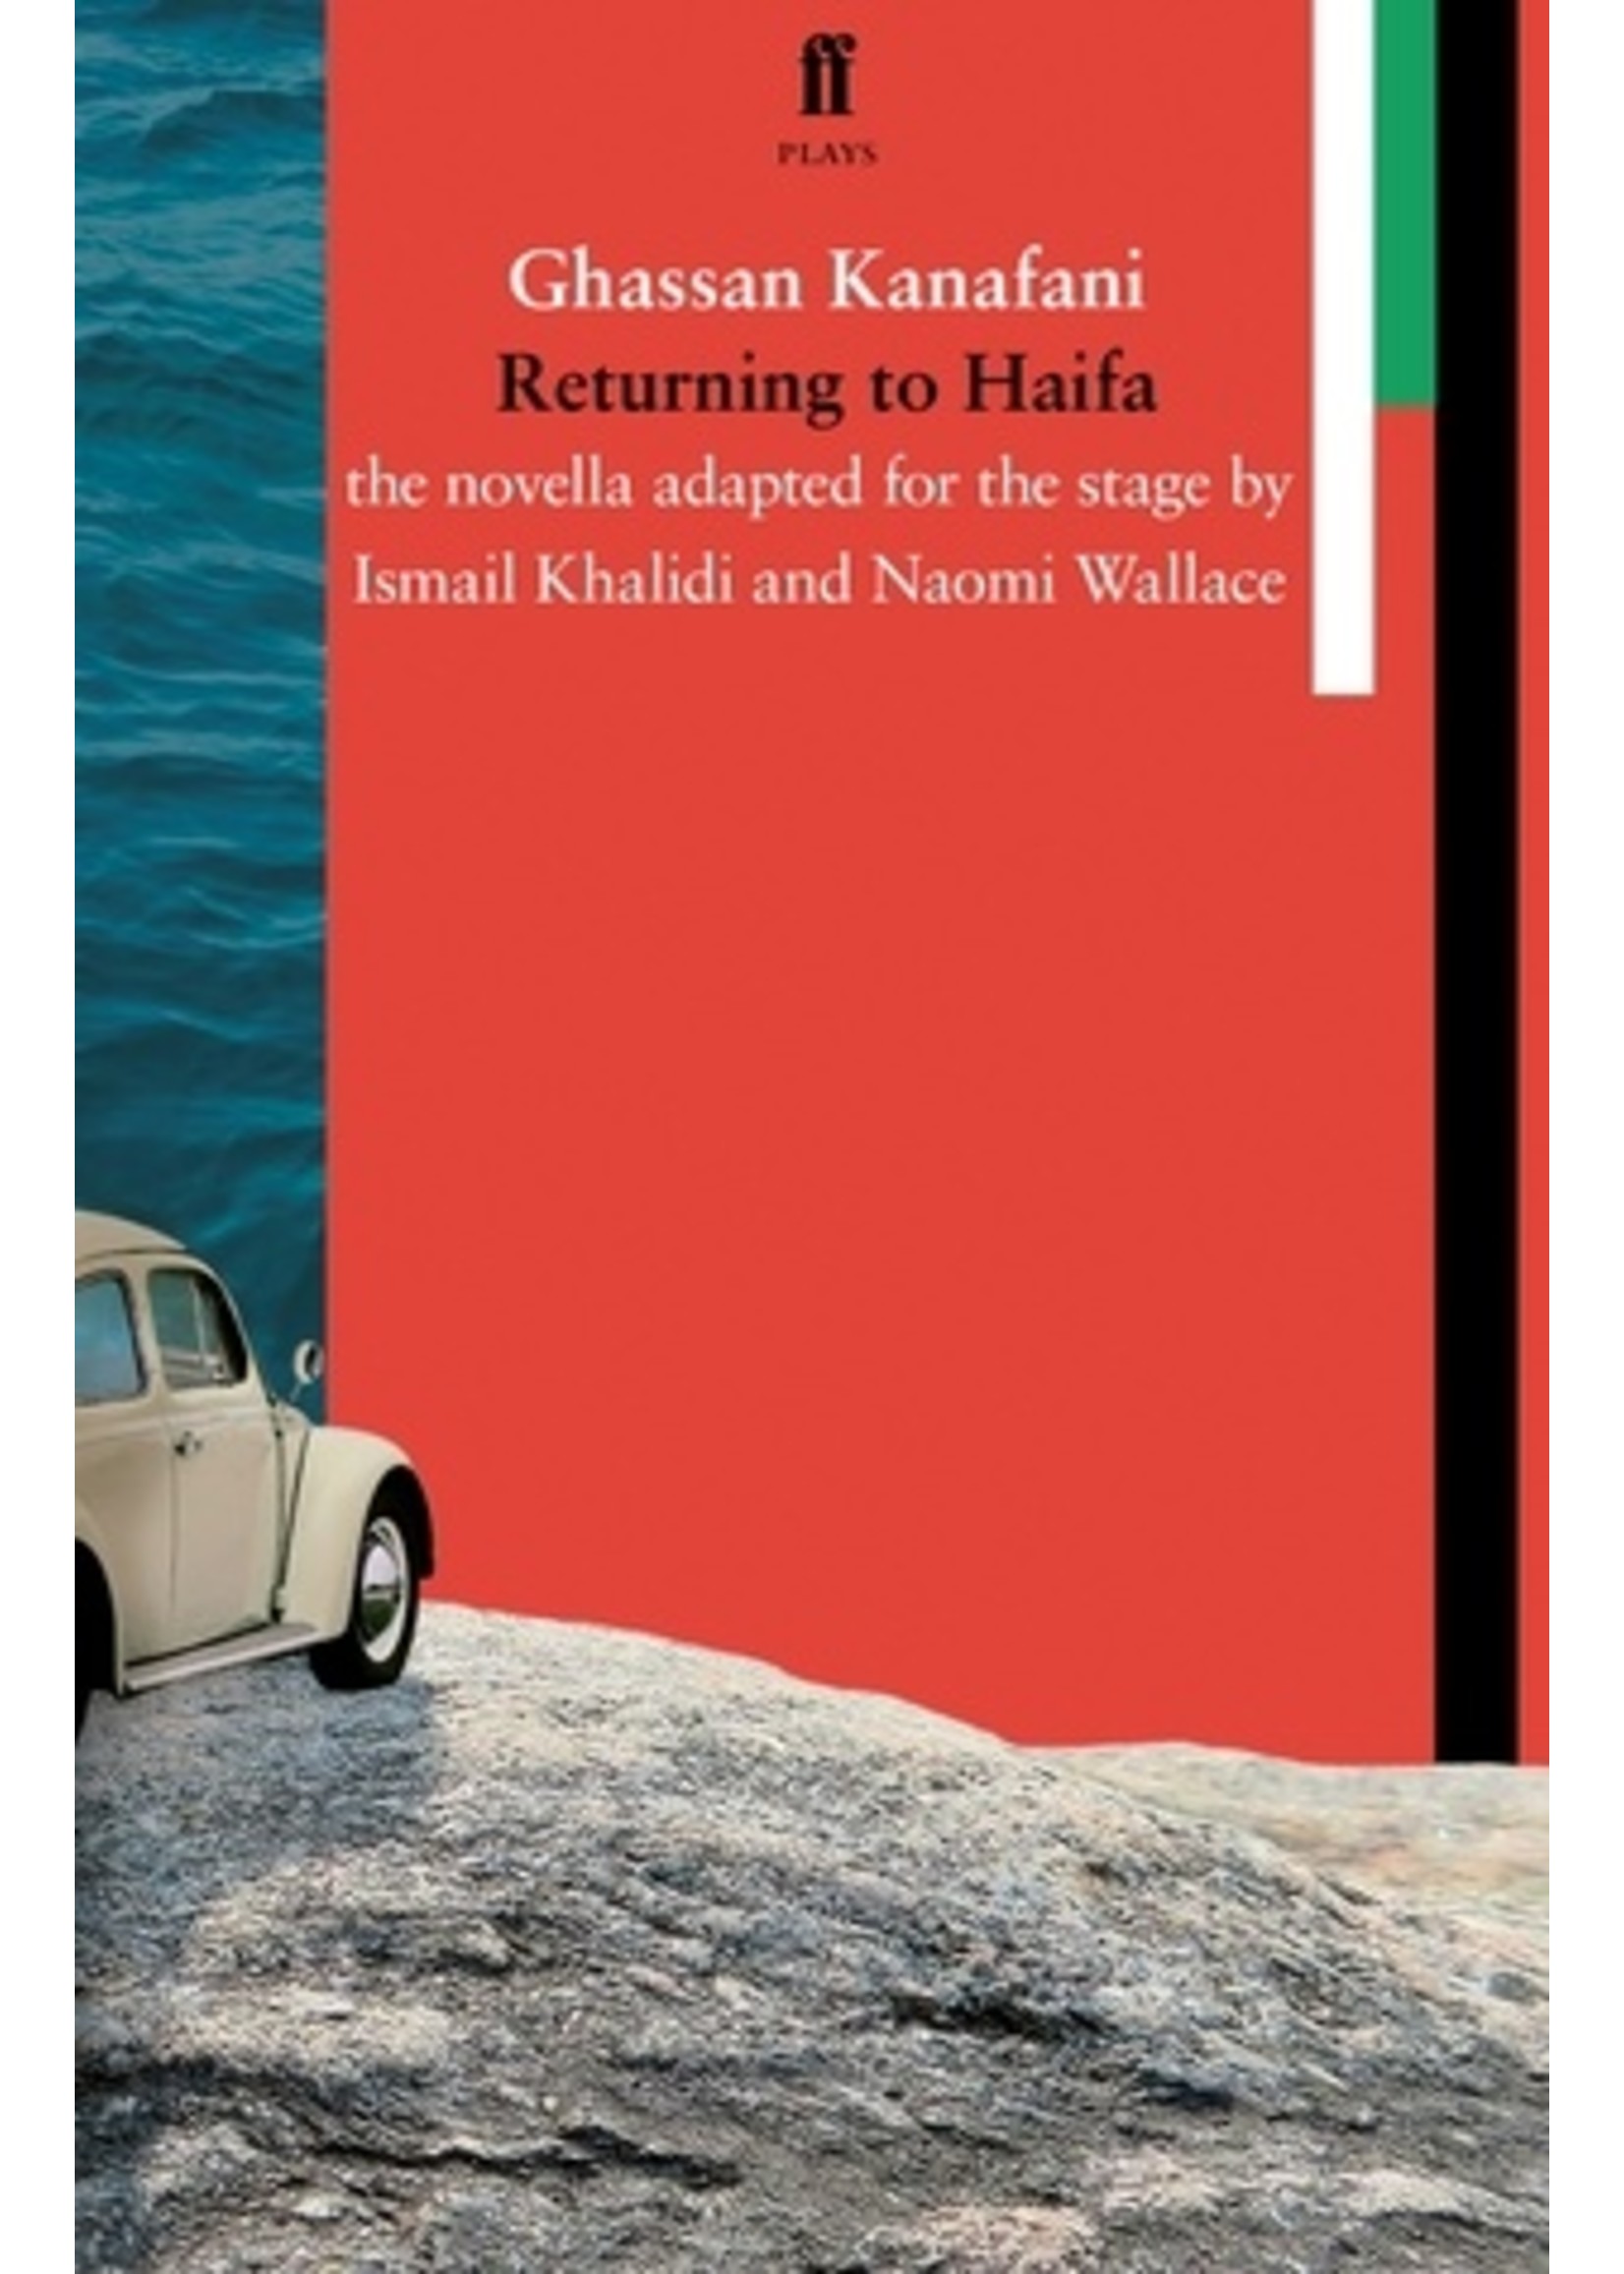 Returning to Haifa by Ghassan Kanafani